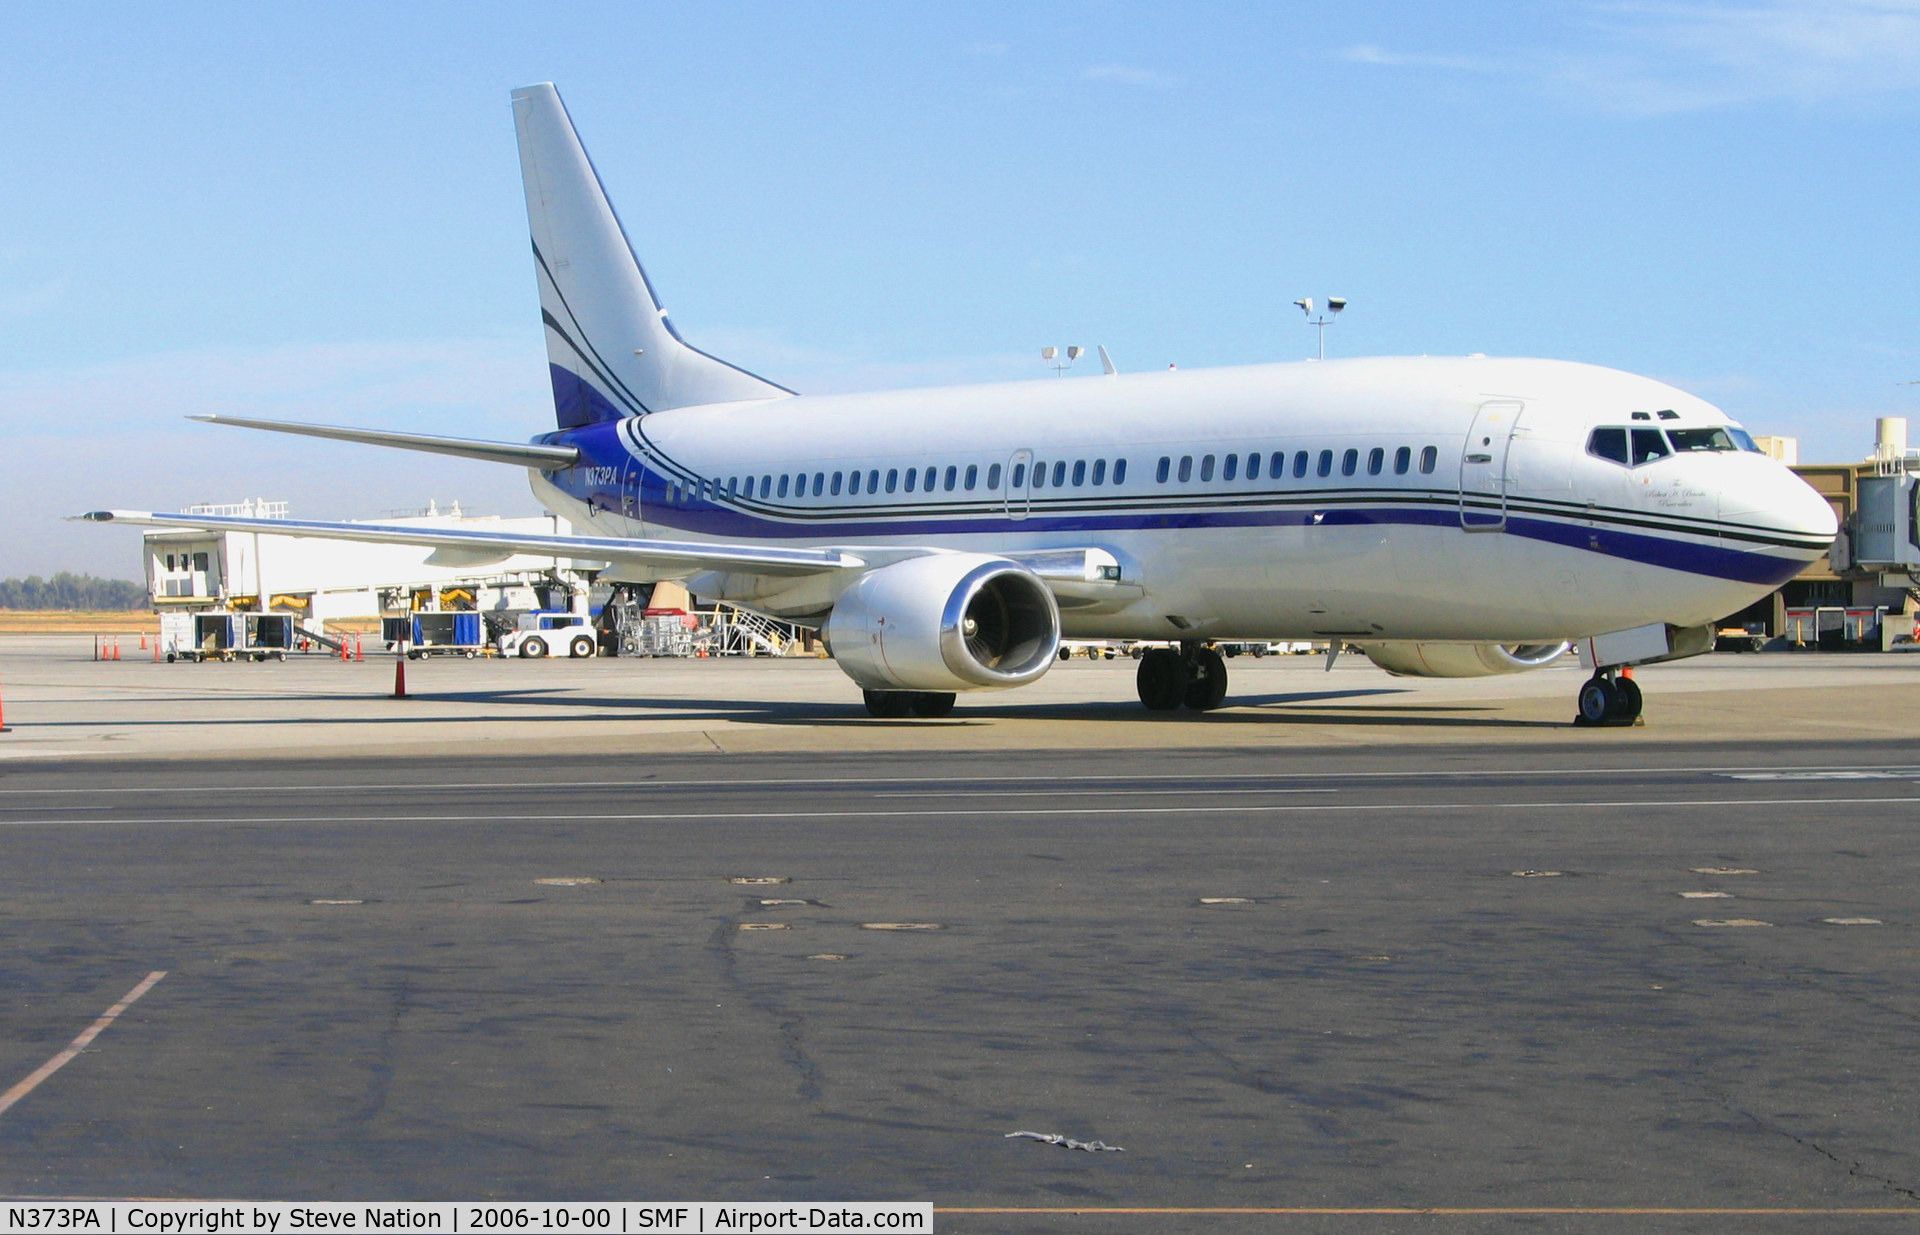 N373PA, 1987 Boeing 737-3Y0 C/N 23749, Piedmont Aviation 1987 737-3Y0 operating charter flight @ Sacramento Metro Airport, CA